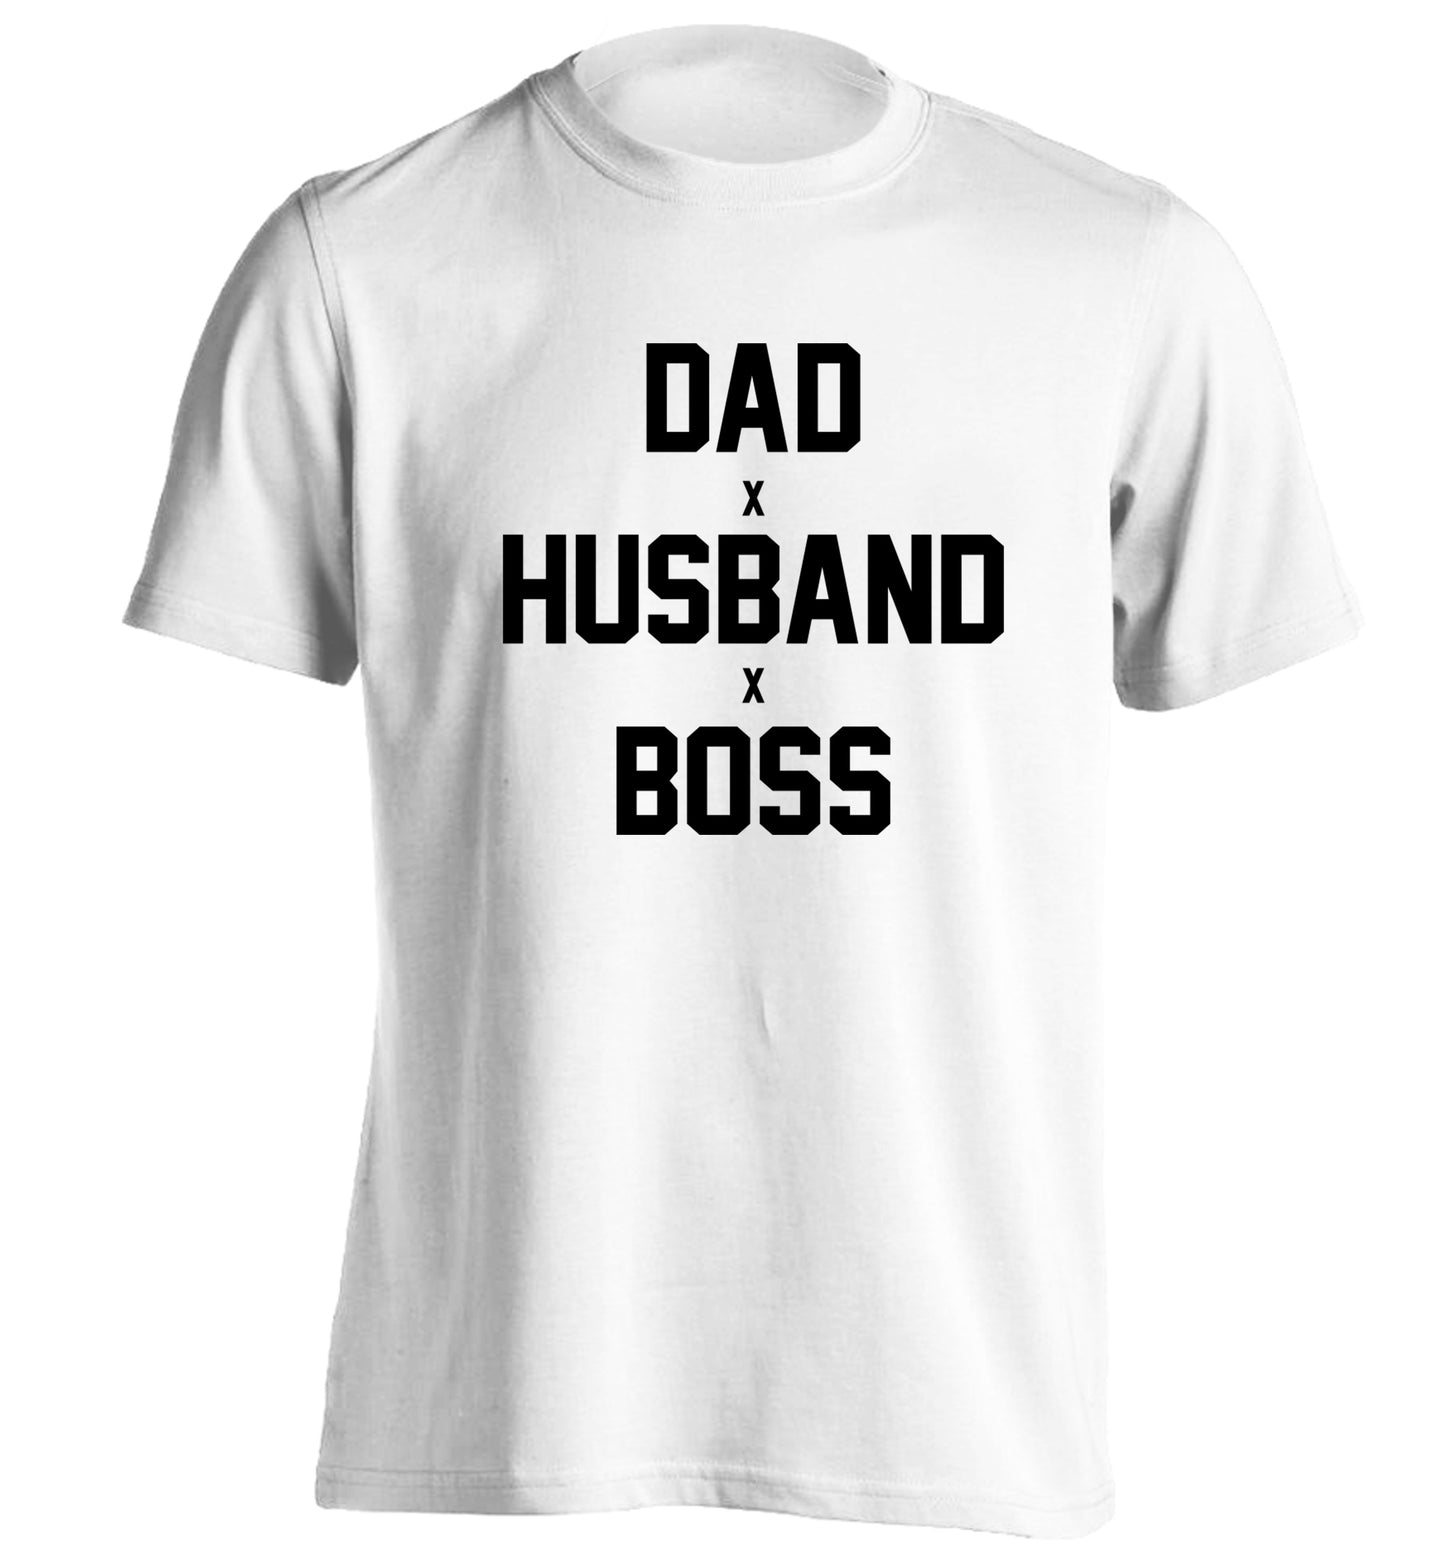 Dad husband boss adults unisex white Tshirt 2XL